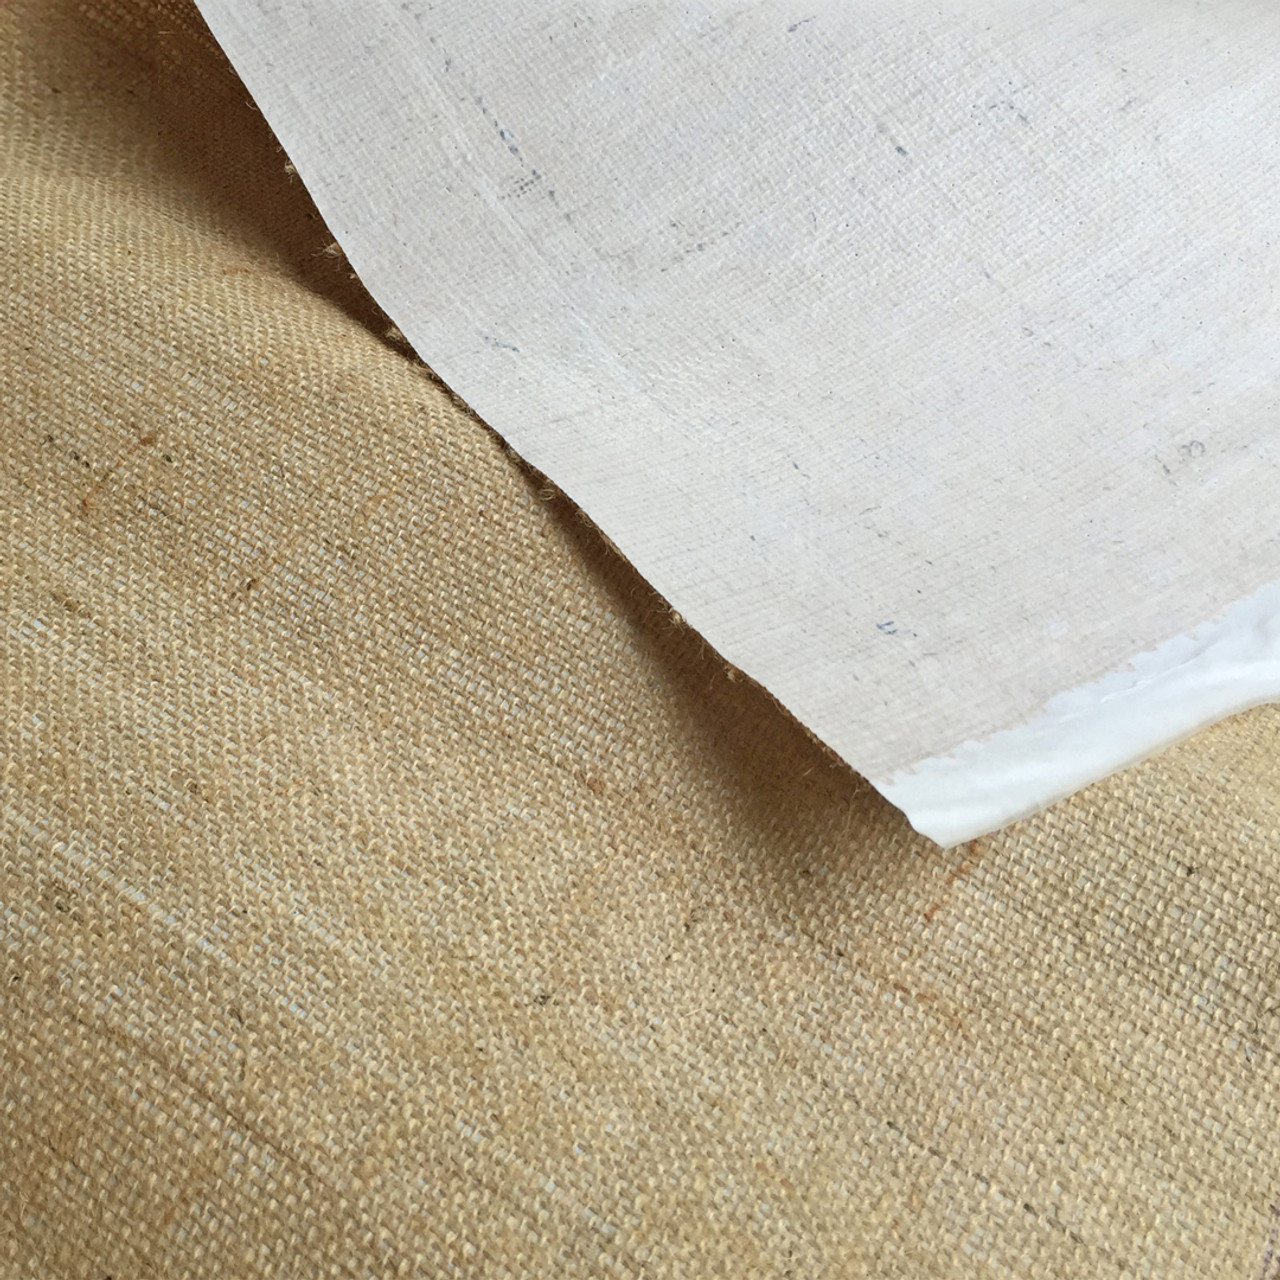 Burlap Concrete Curing Blankets - Curelap / Burlene - 10 ft Wide – Sandbaggy